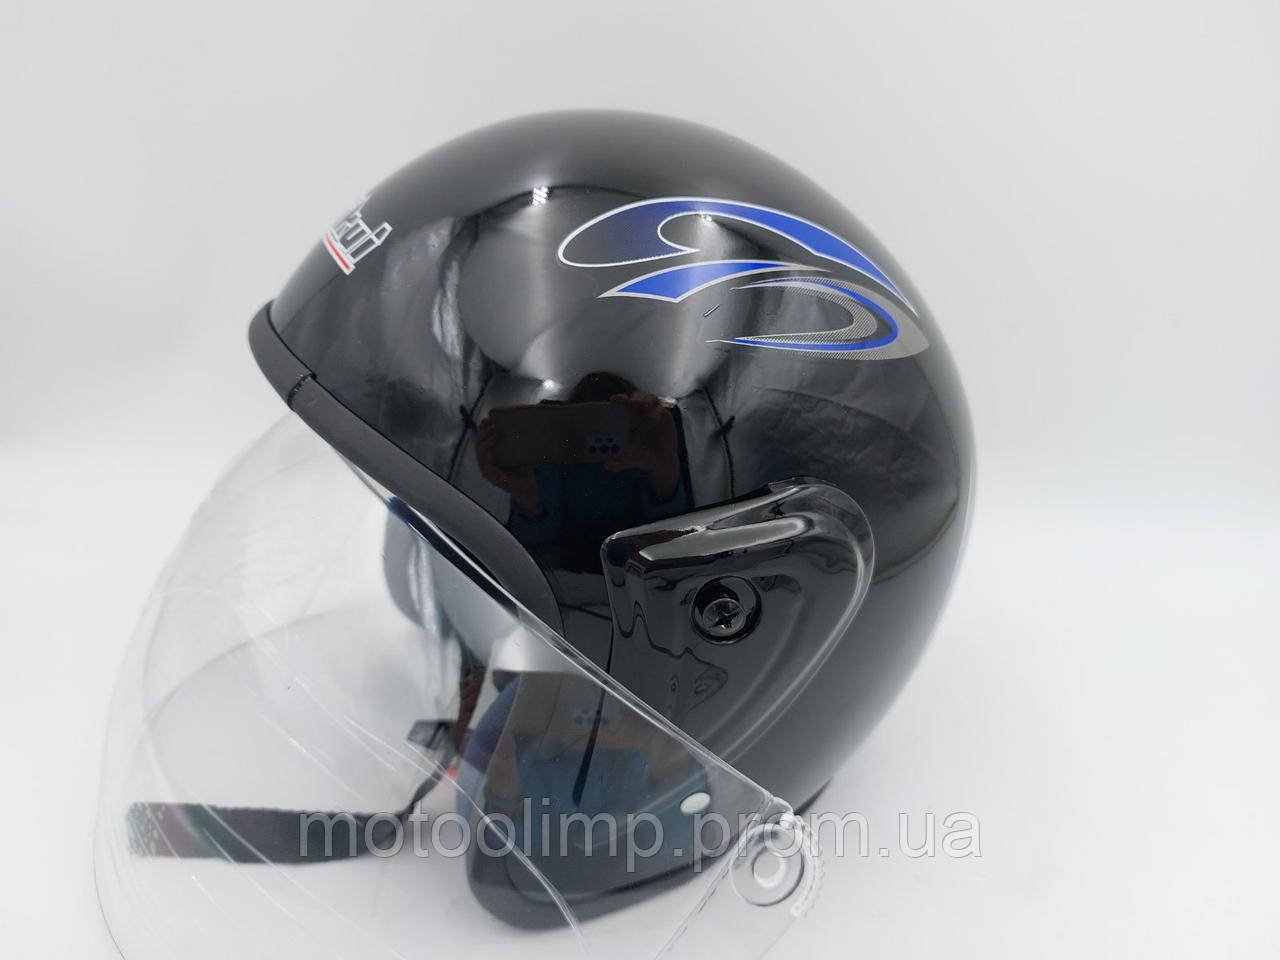 Мото шлем открытый для скутера и мотоцикла р.M-L (57-59см), летний Чорний